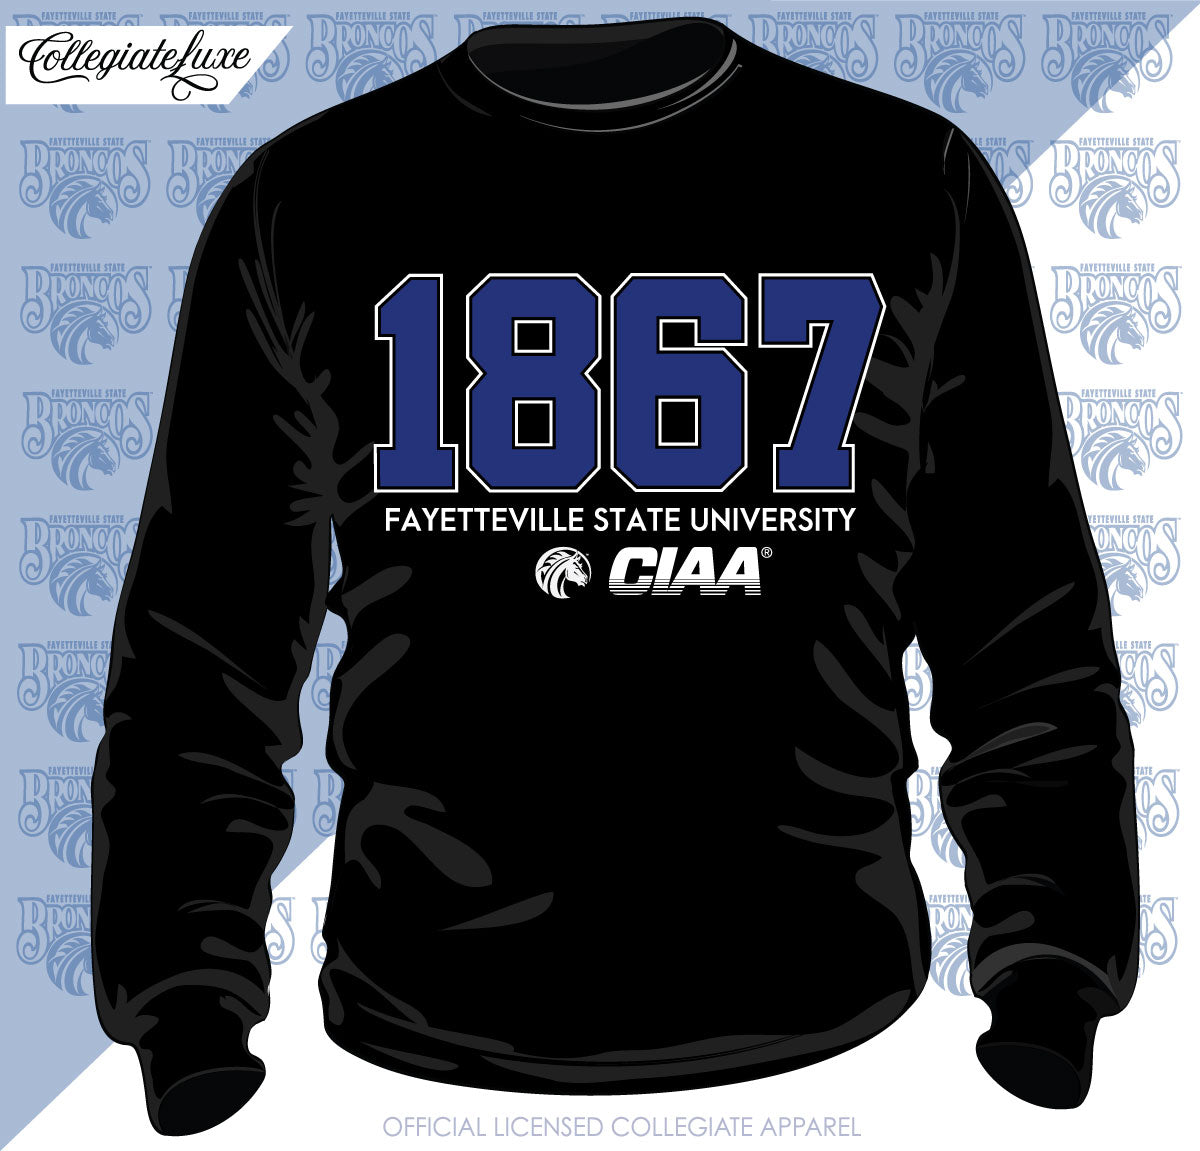 Fayetteville State | Est 1867 | Black unisex Sweatshirt (bre)